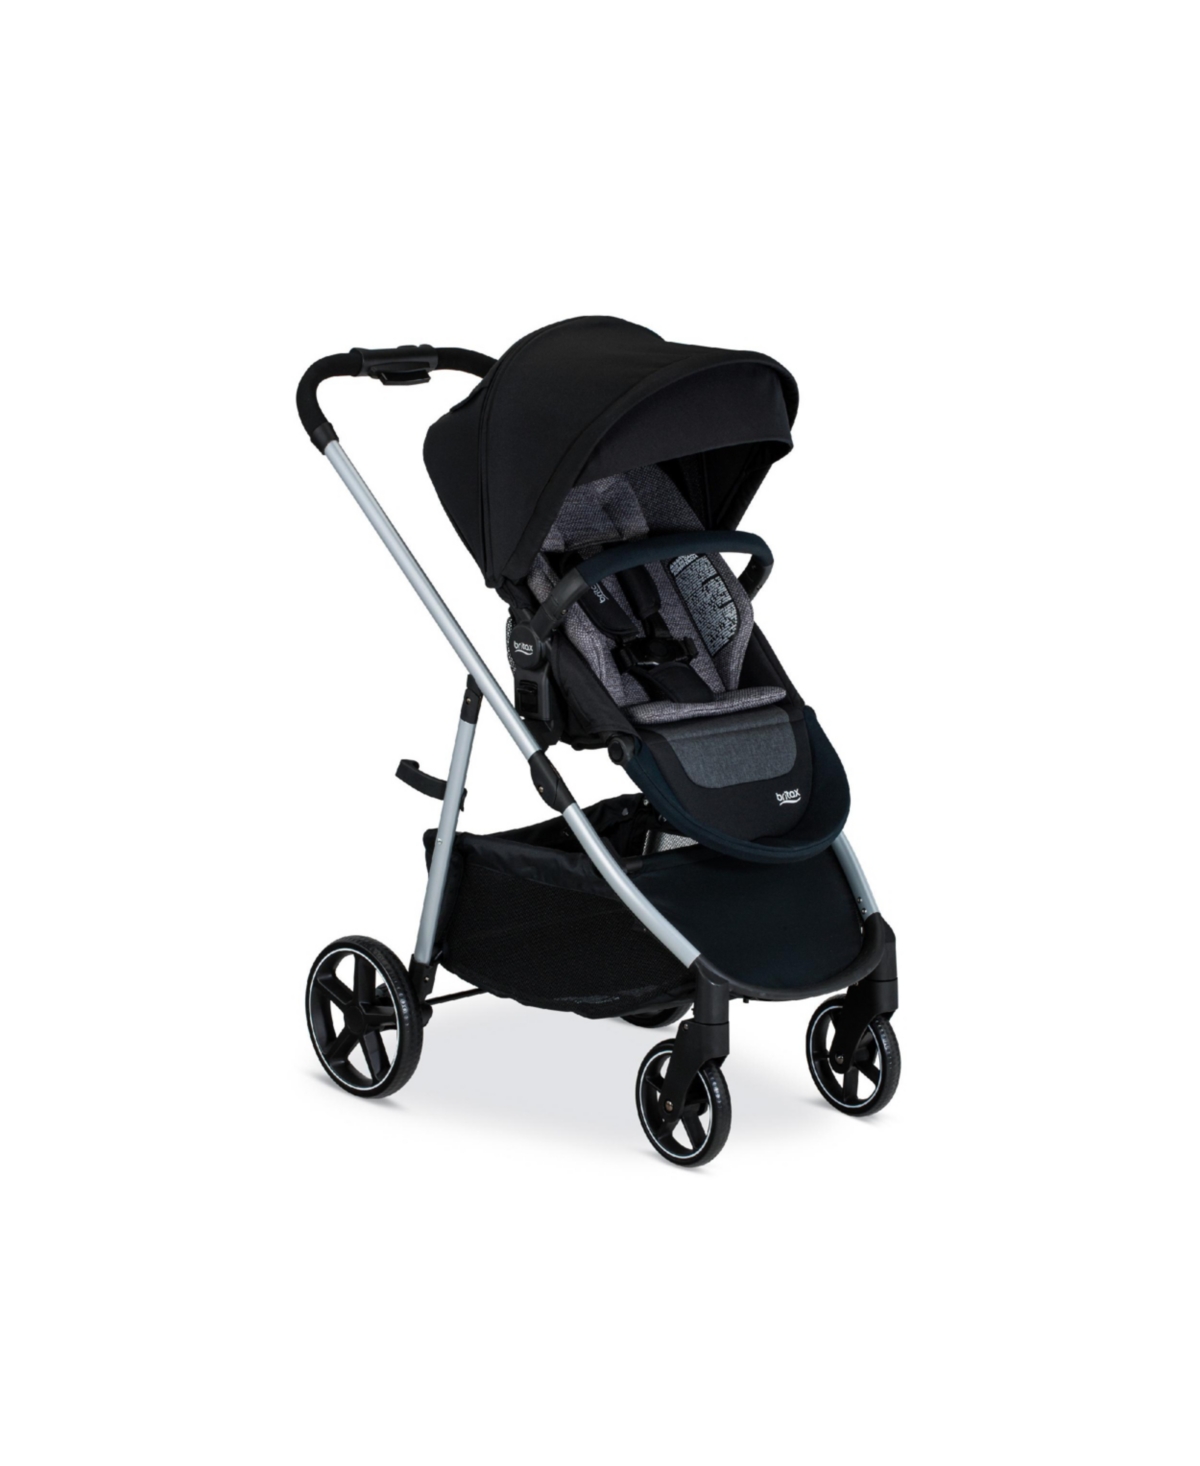 Britax Babies' Grove Modular Stroller In Black